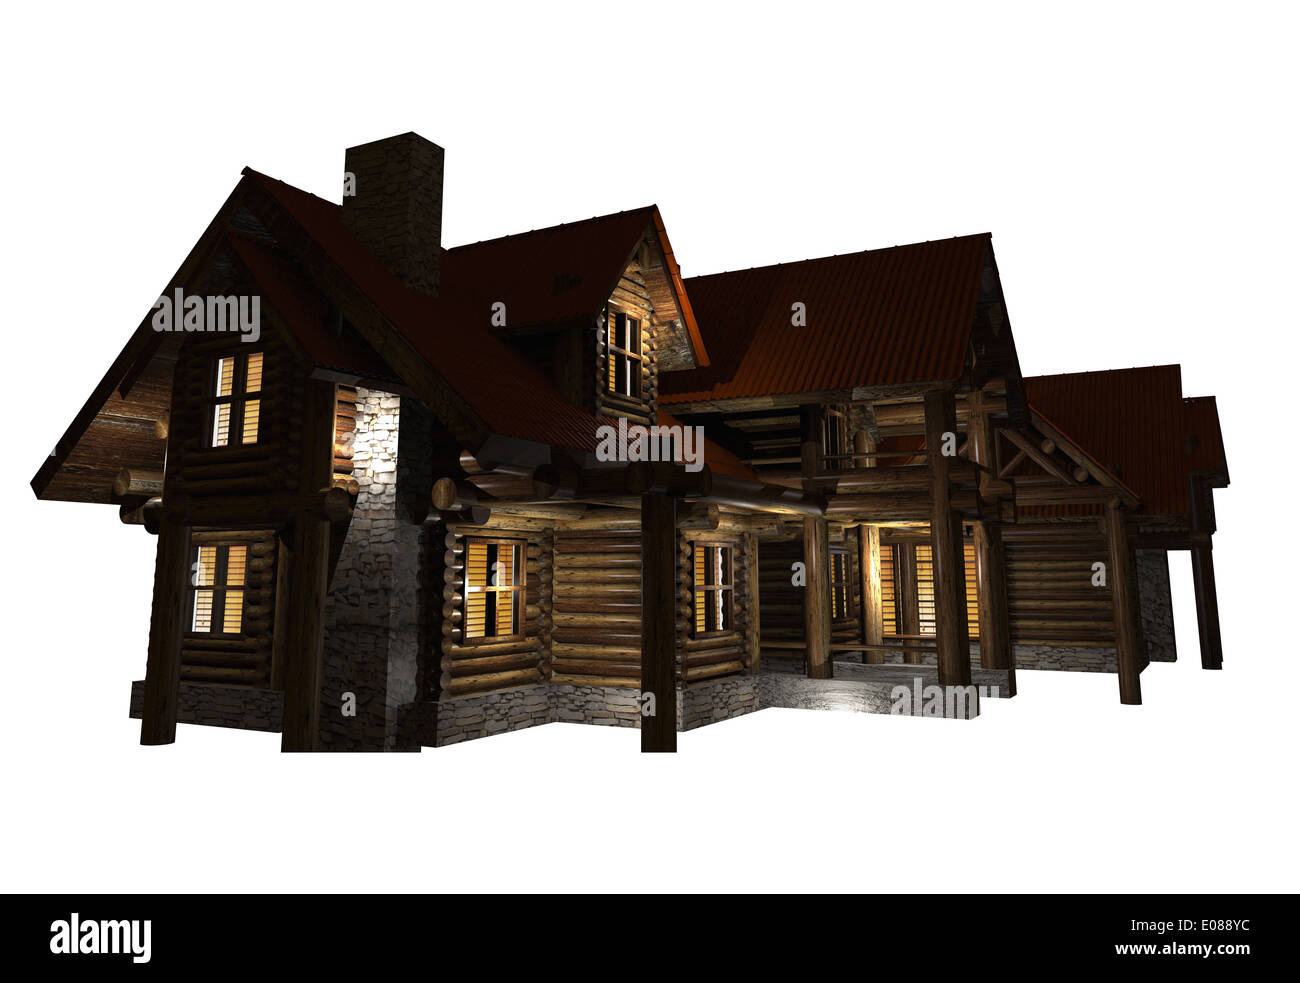 Blockhaus isoliert Grafik. Log House Nacht Beleuchtung 3D Render Illustration. Stockfoto